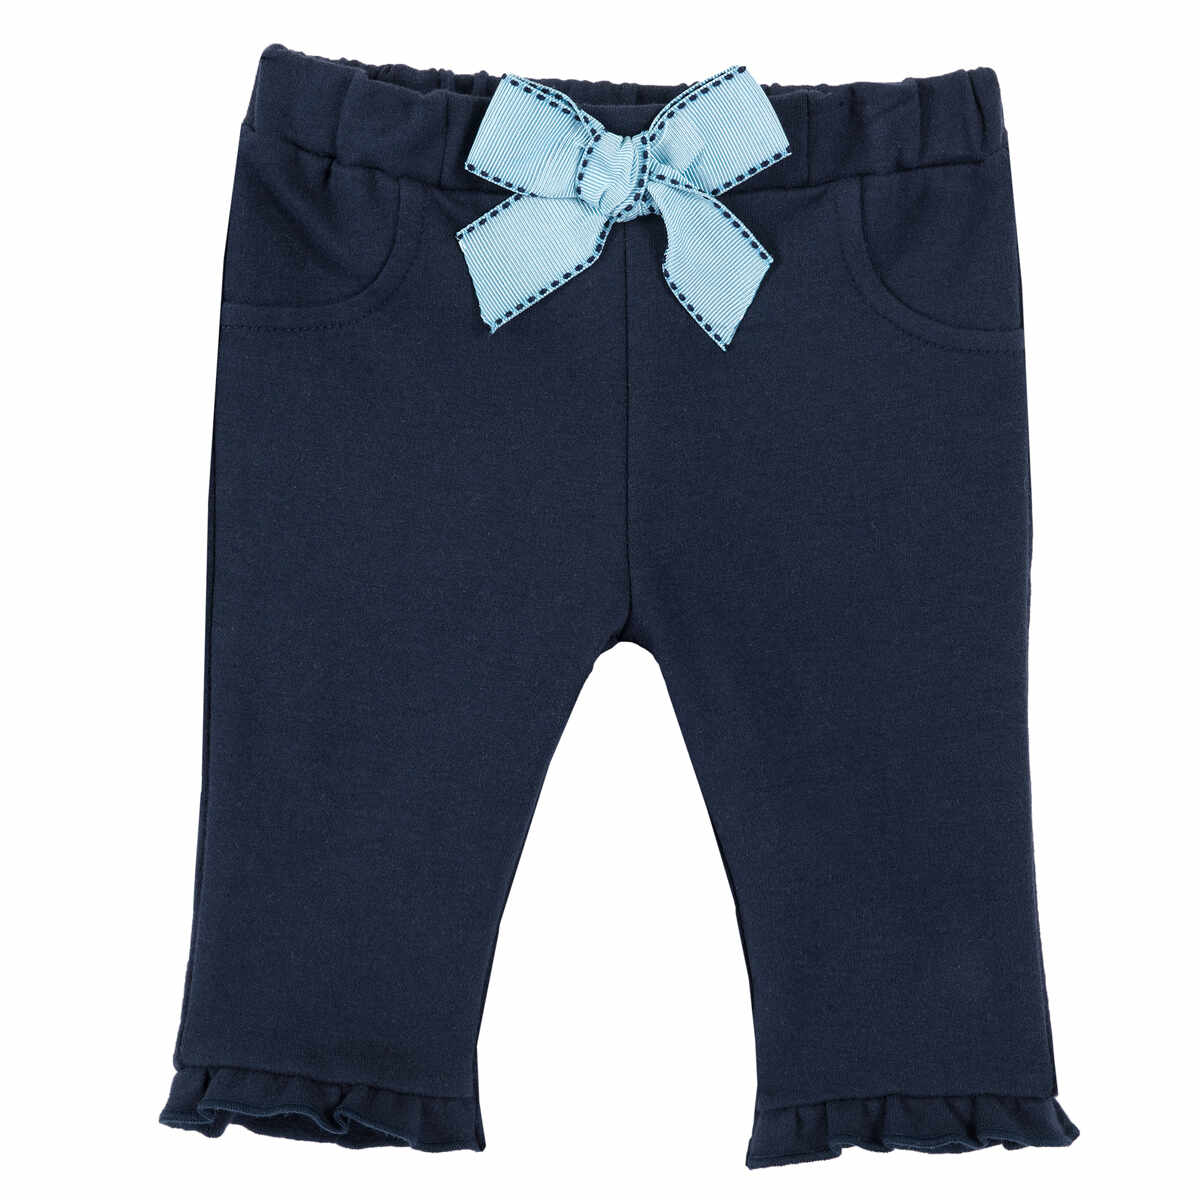 Pantaloni lungi copii Chicco, jerse elastic, fundita turcoaz, 25850